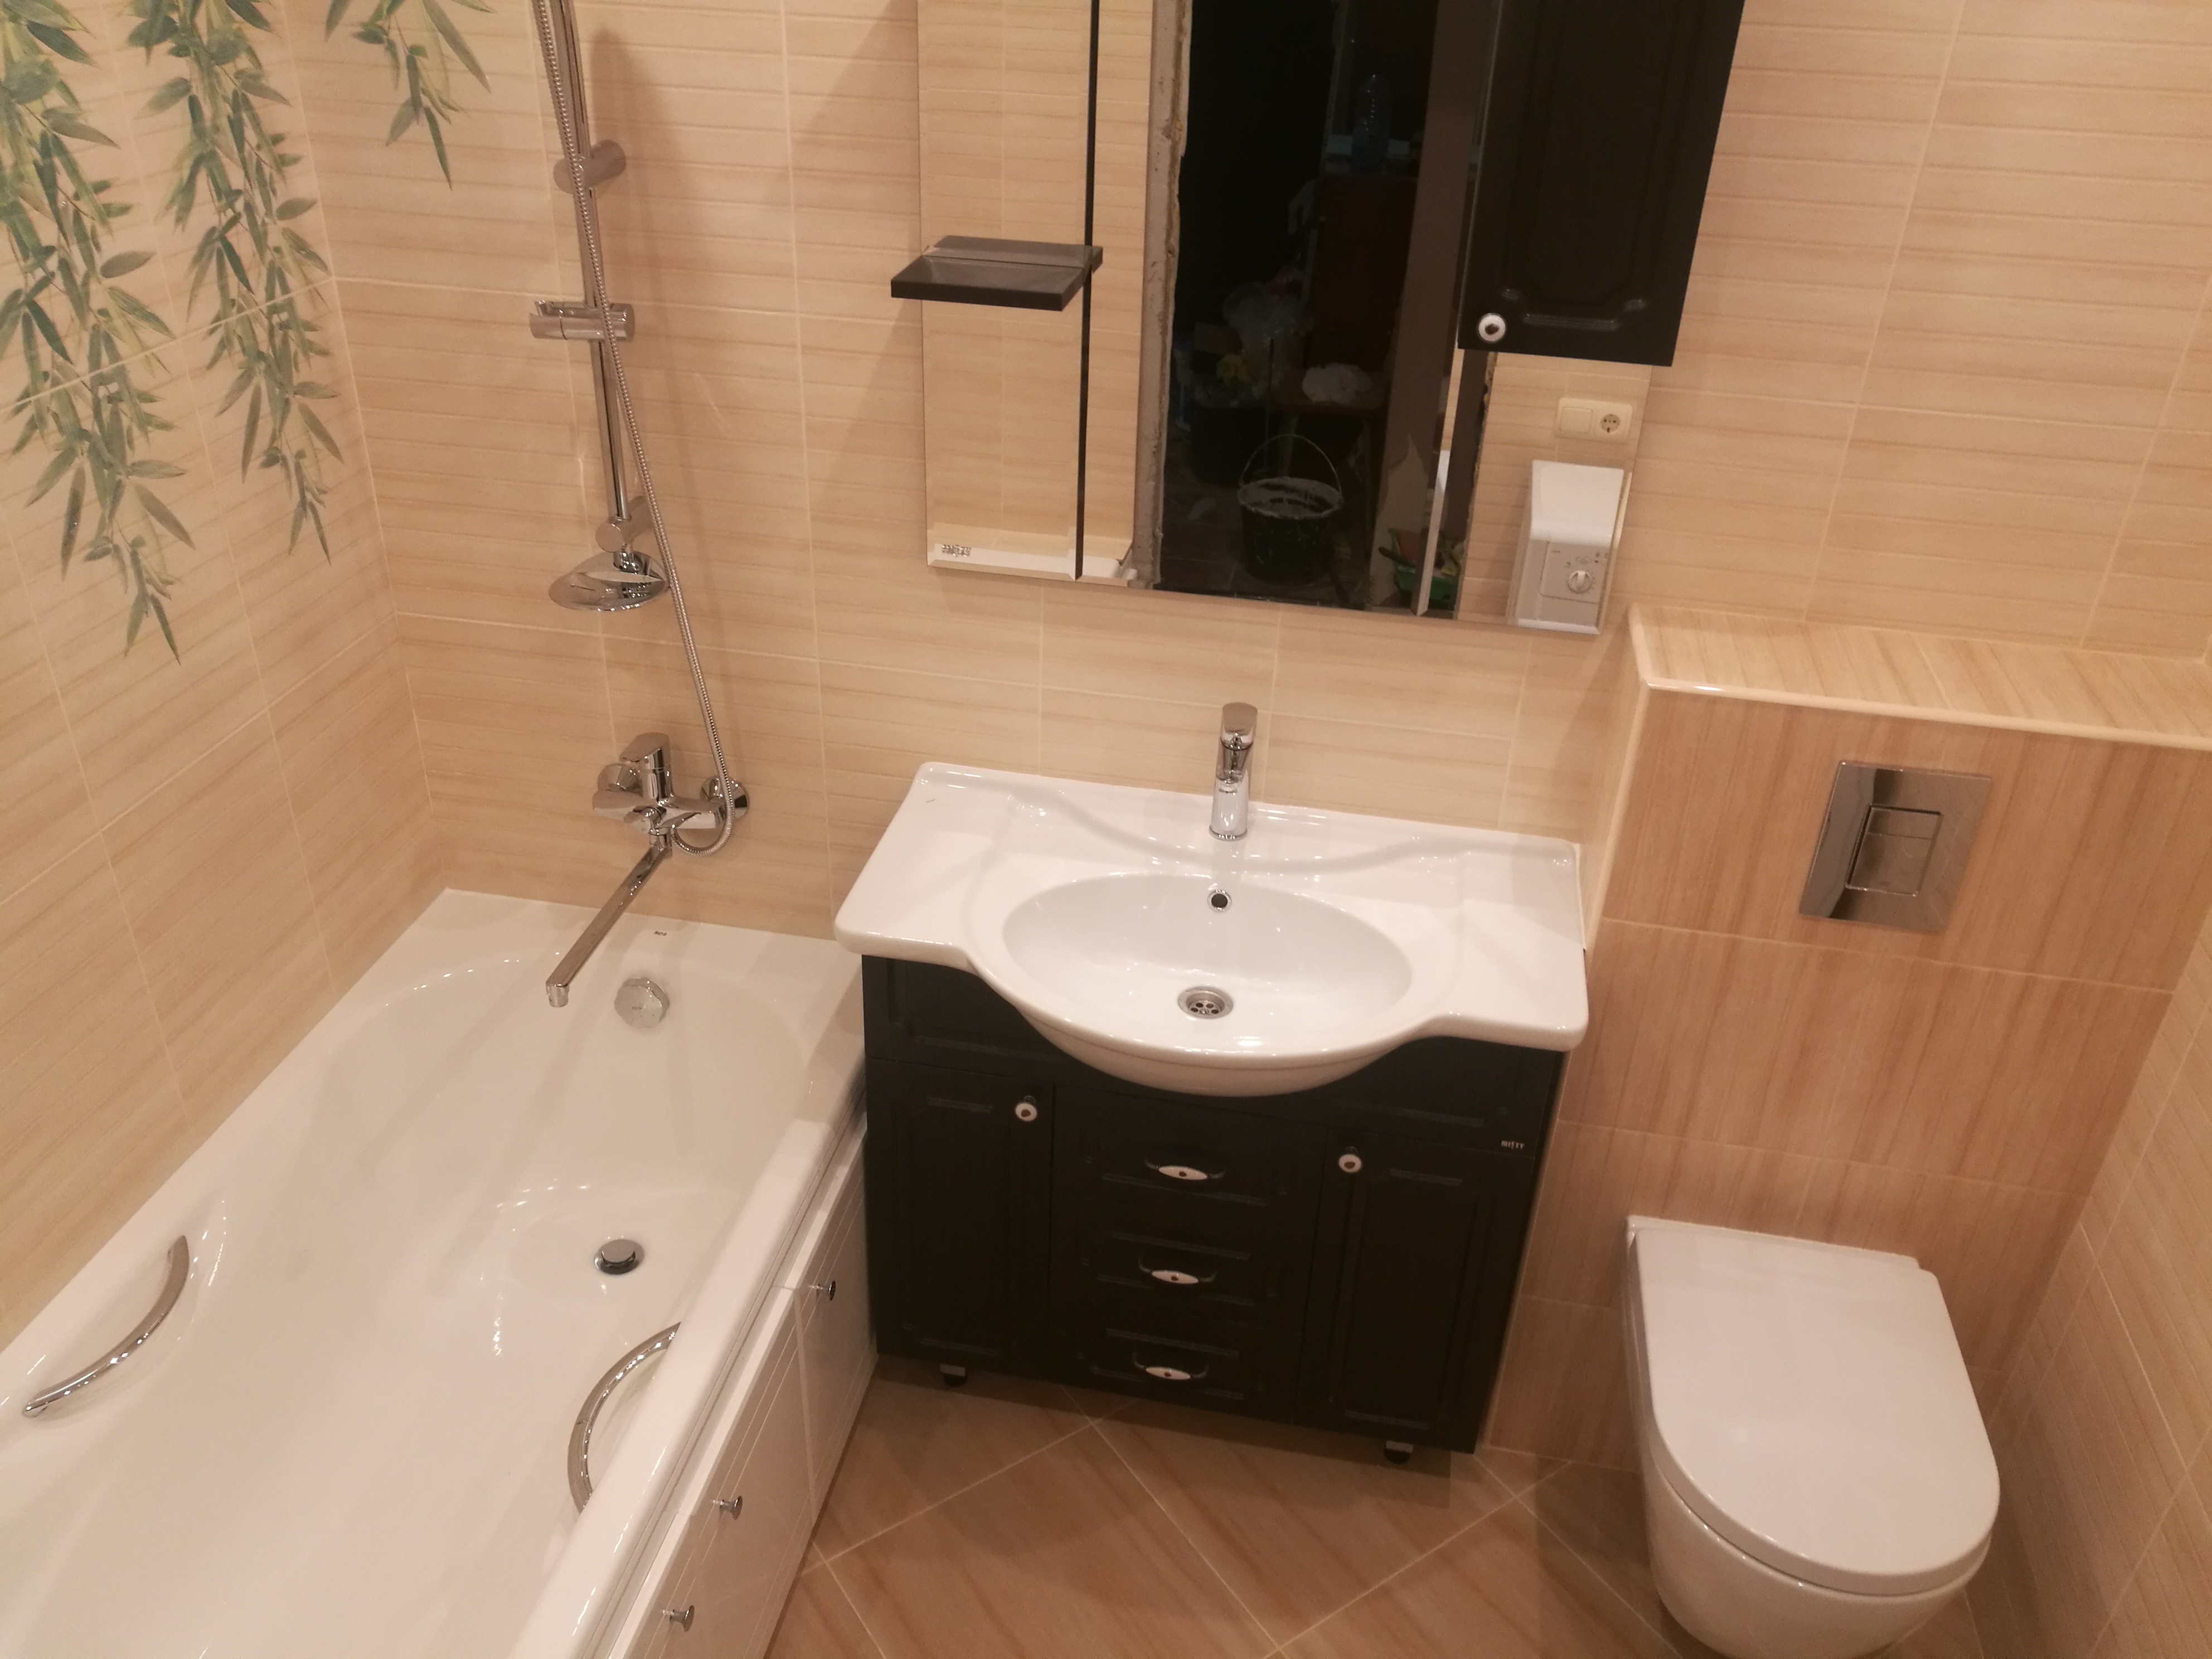 Ремонт санузла-отделка ванной комнаты и туалета под ключ с материалами цена